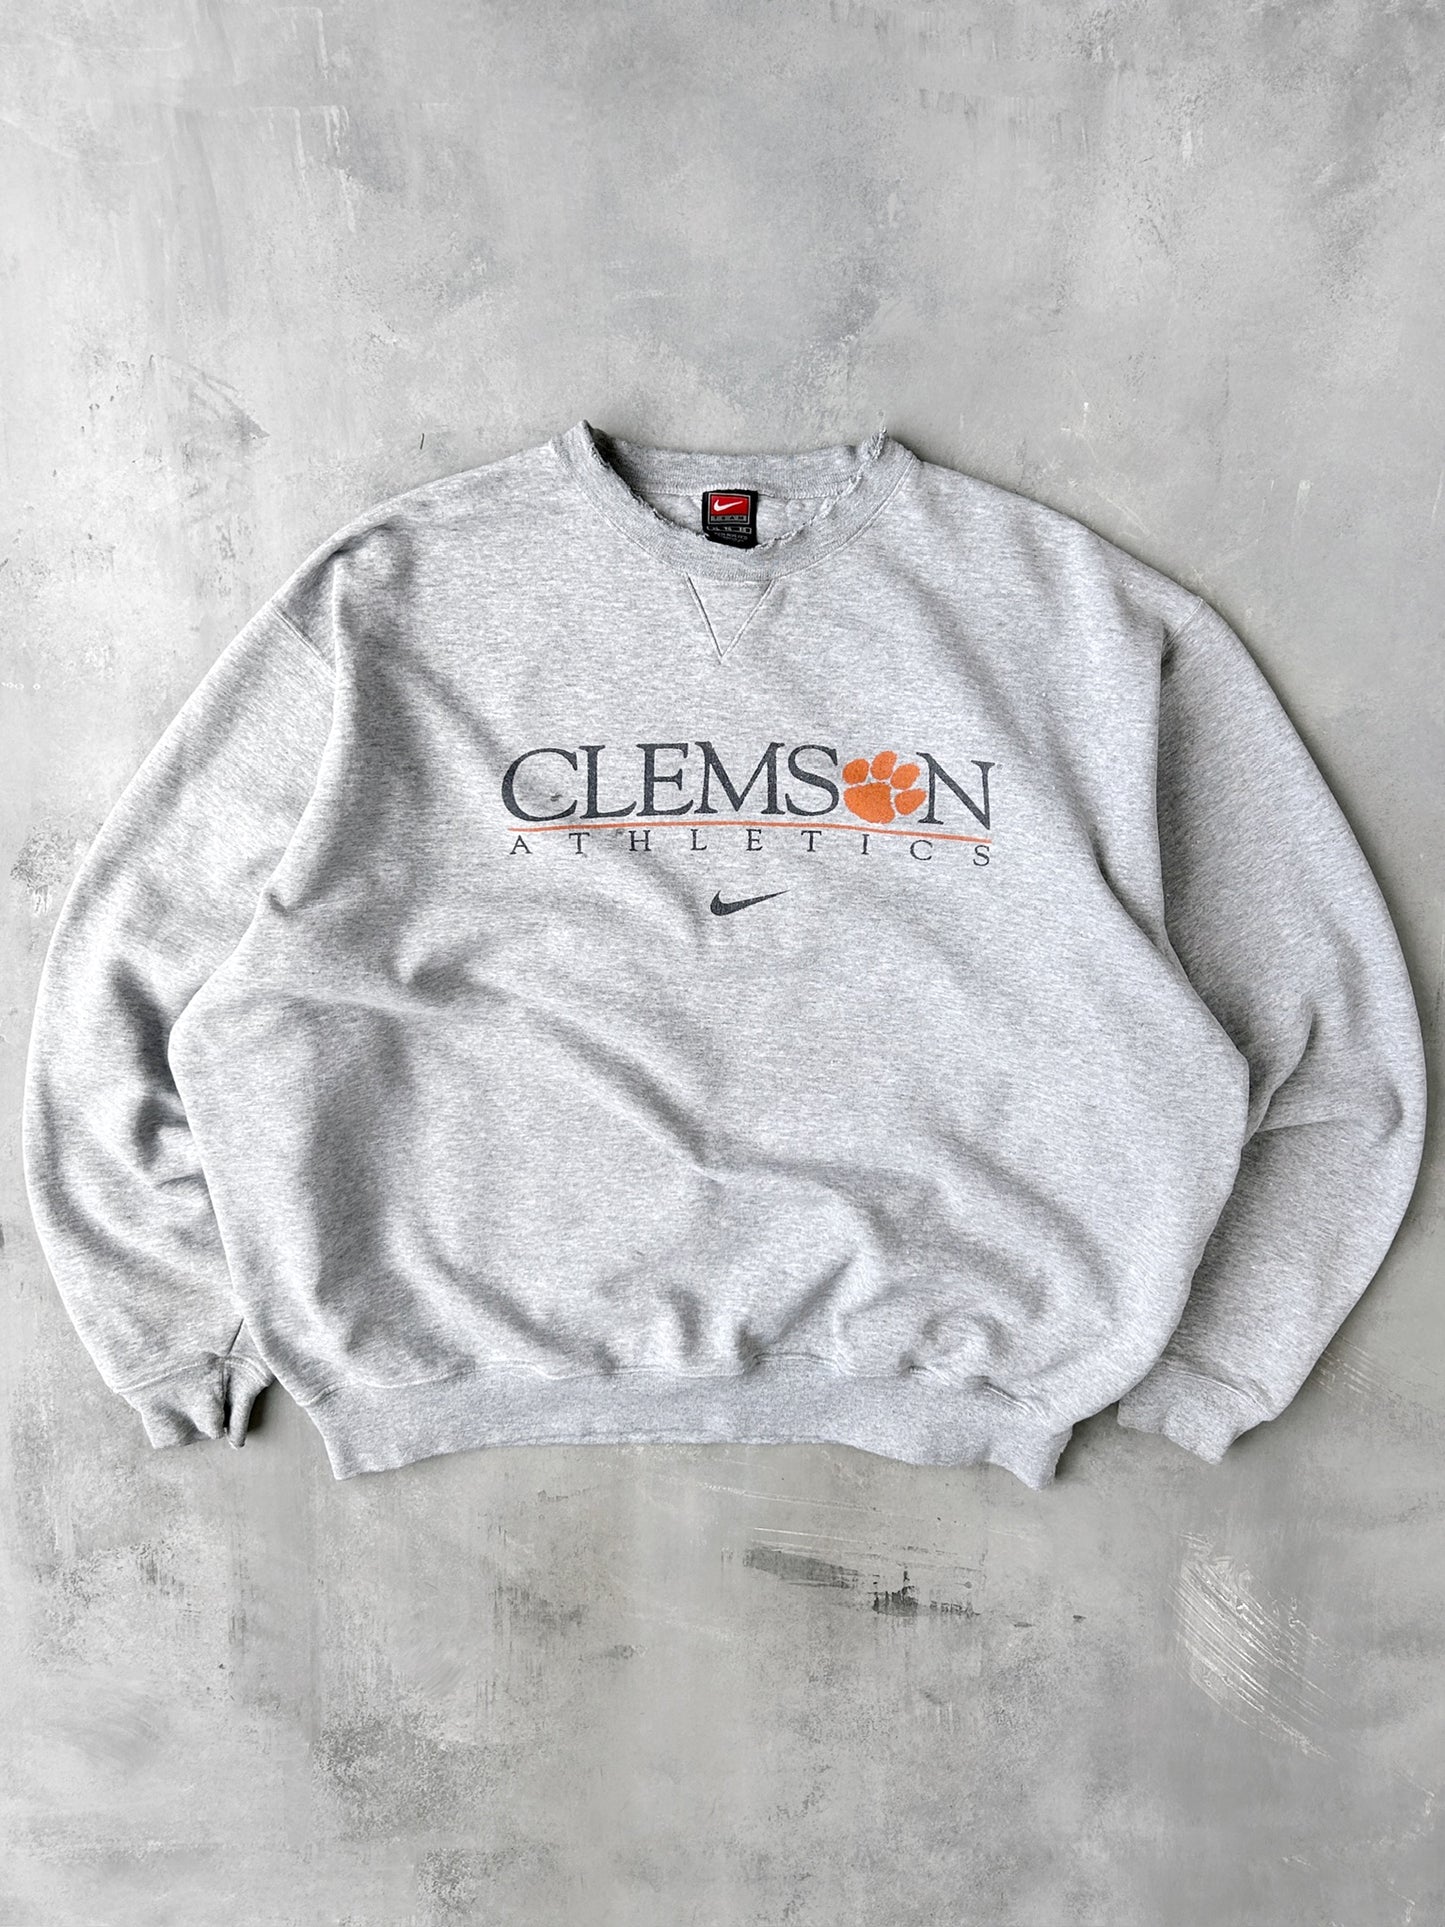 Clemson University Athletics Sweatshirt 00's - XL